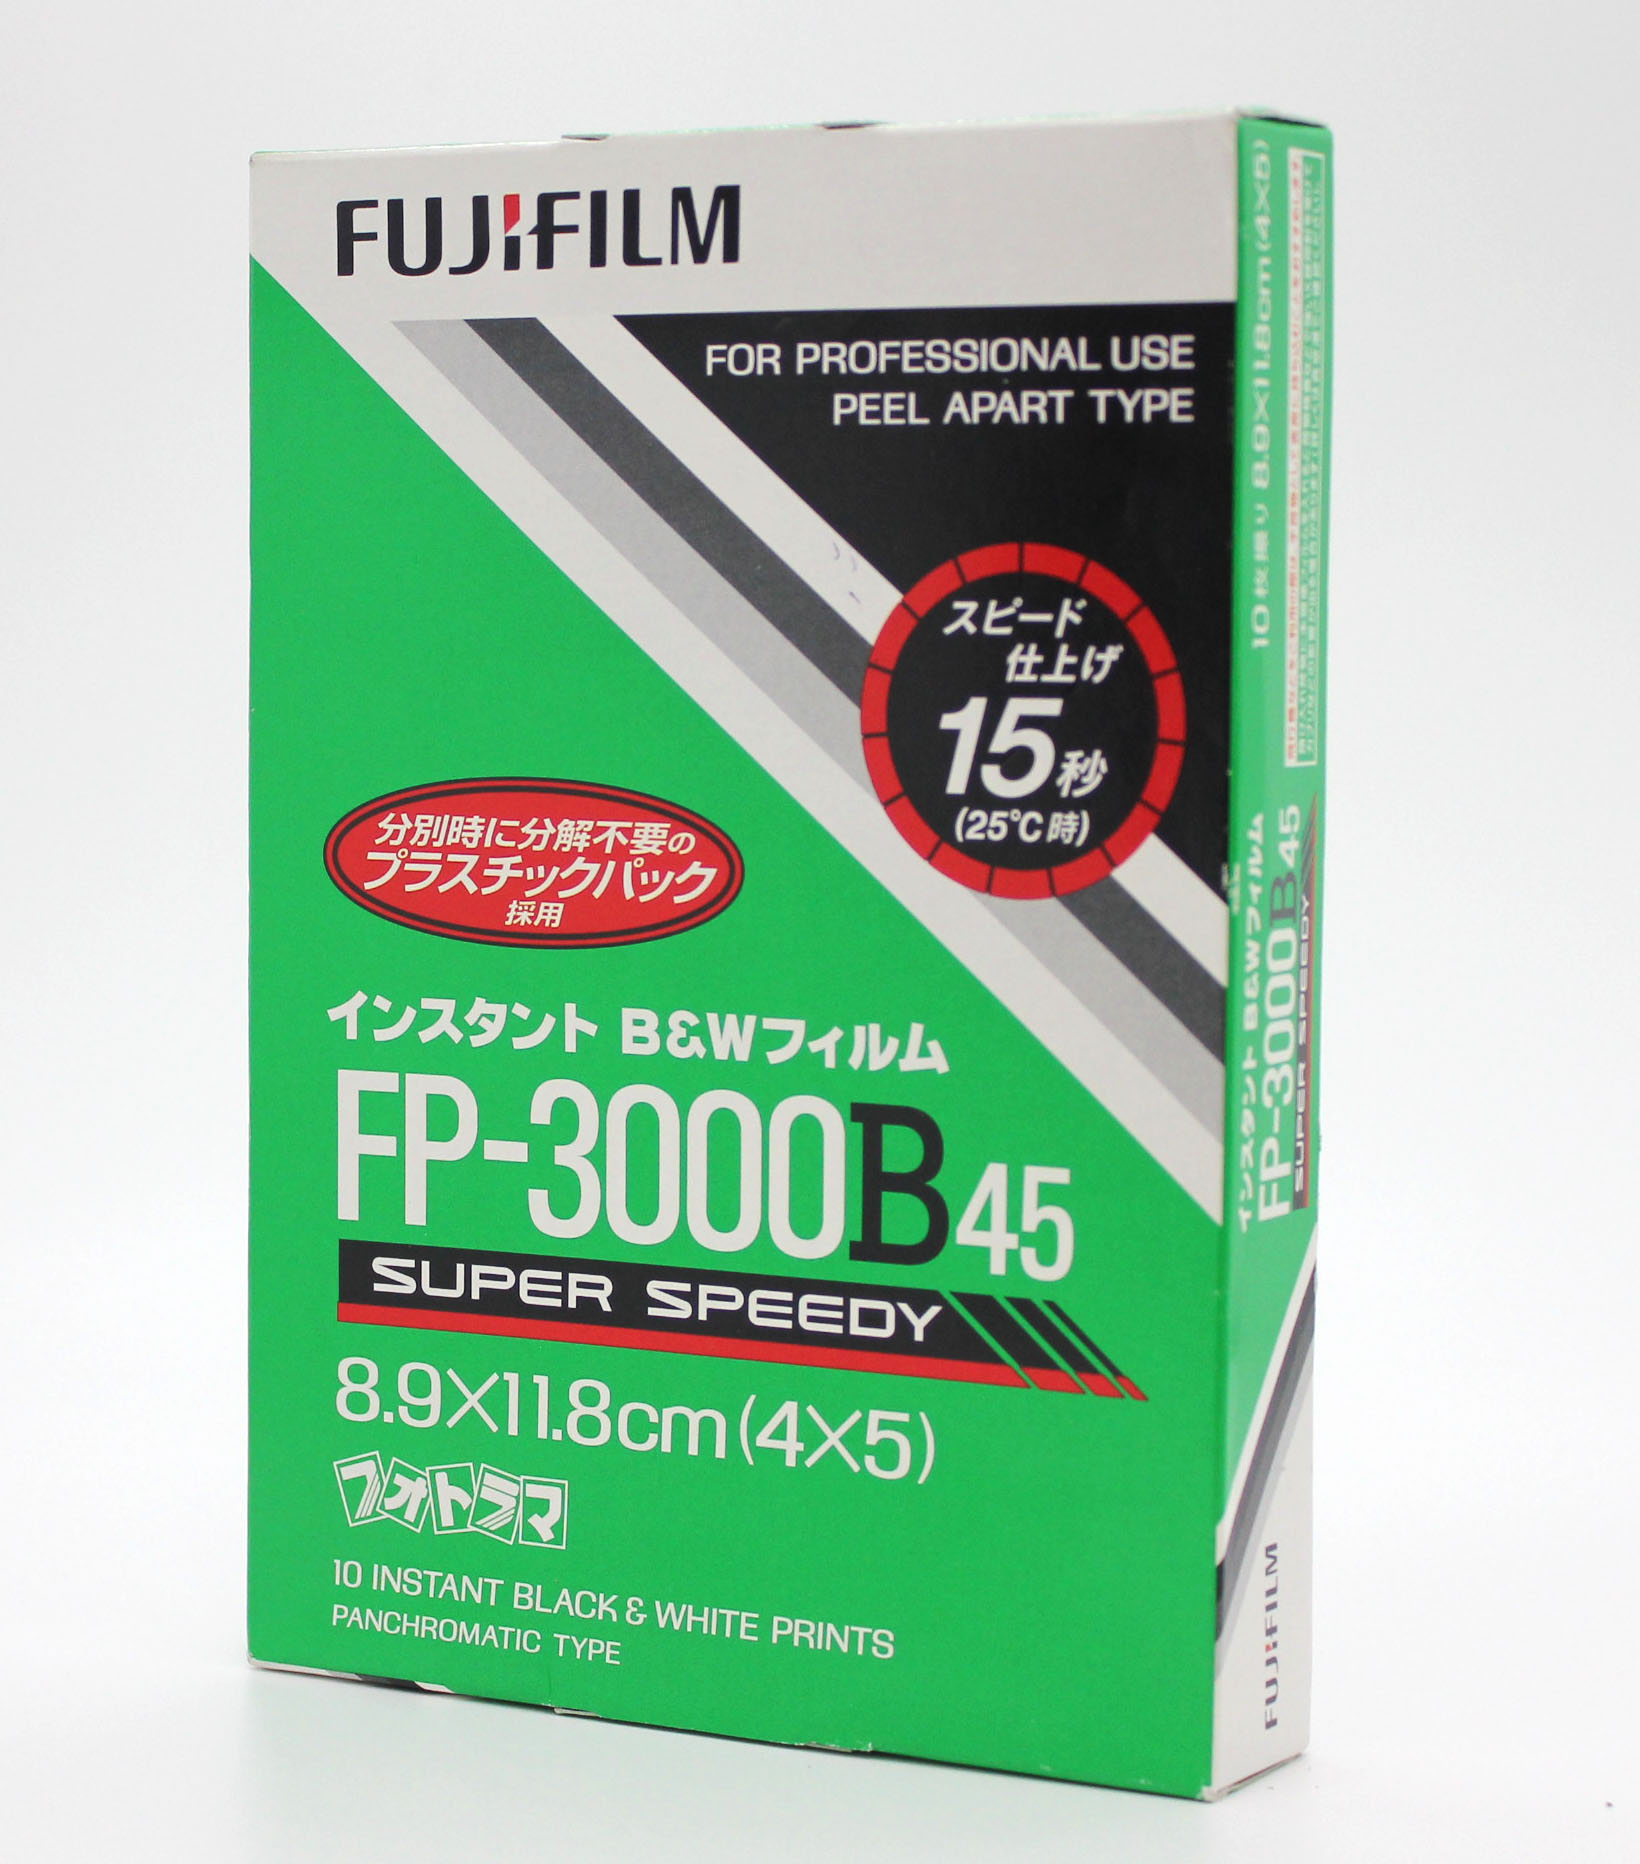 [New] Fuji Fujifilm FP-3000B45 4x5 8.9x11.8cm Instant Black & White Film (EXP 10/2010) from Japan